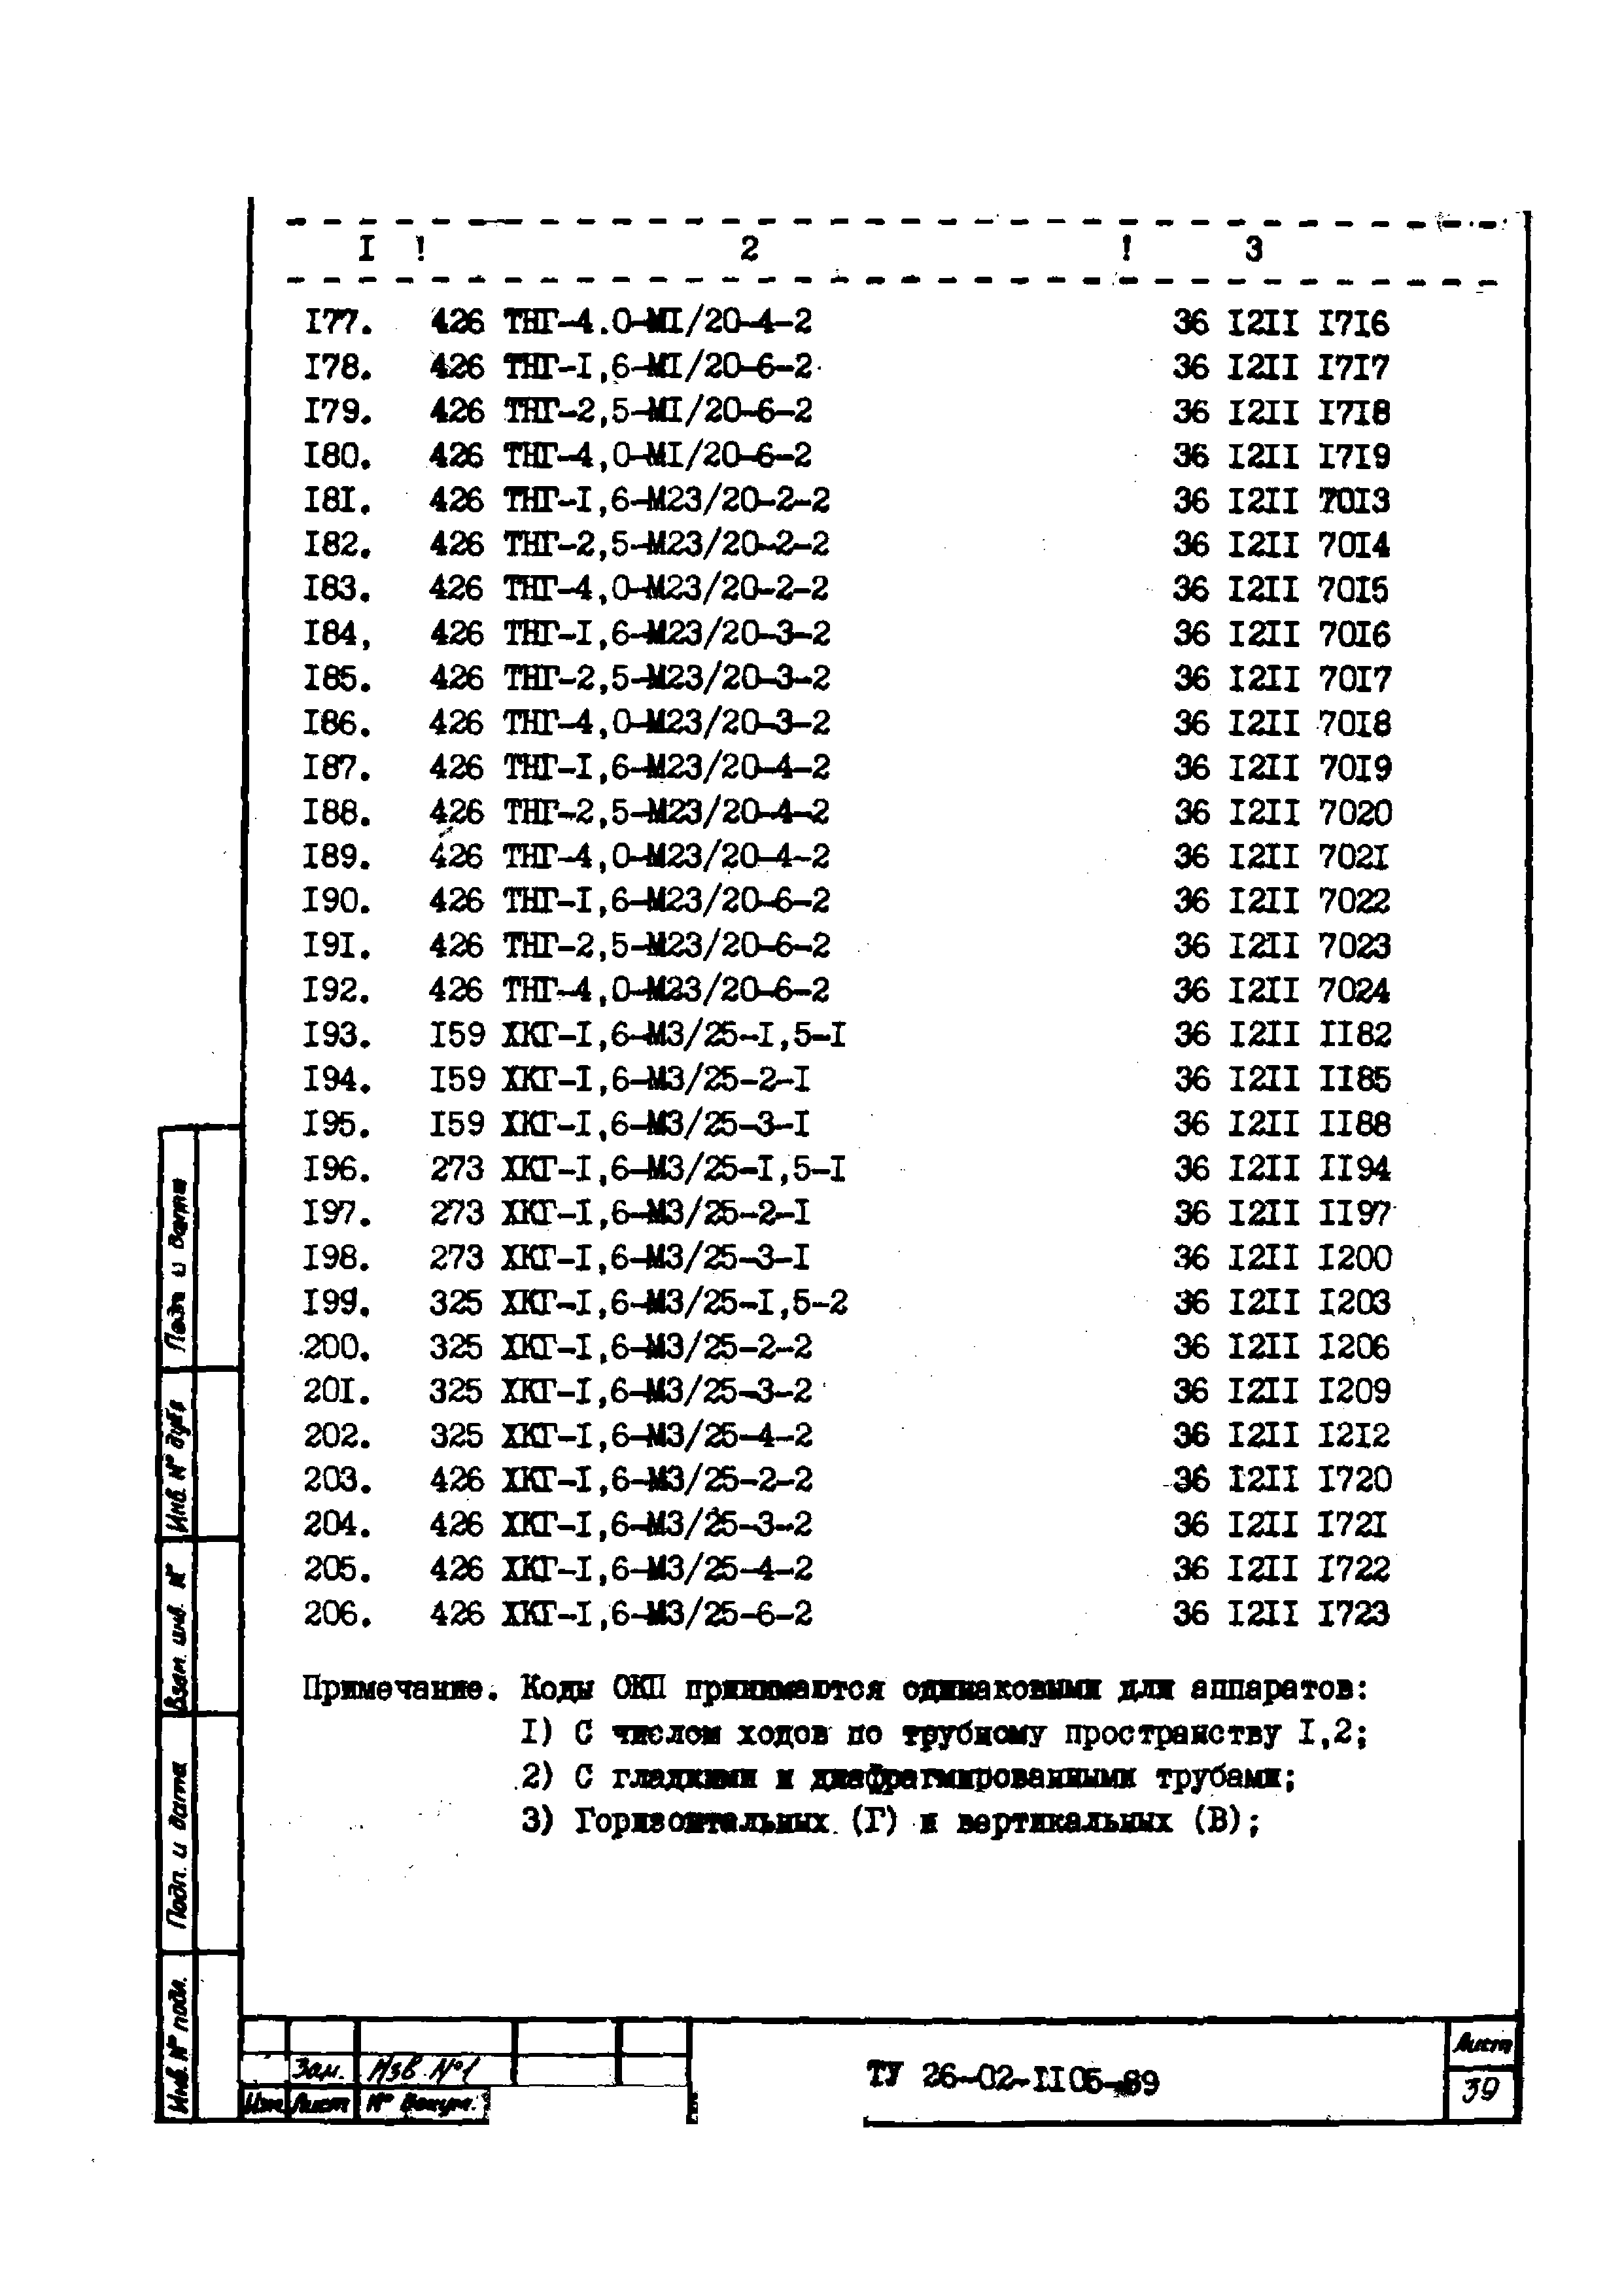 ТУ 26-02-1105-89